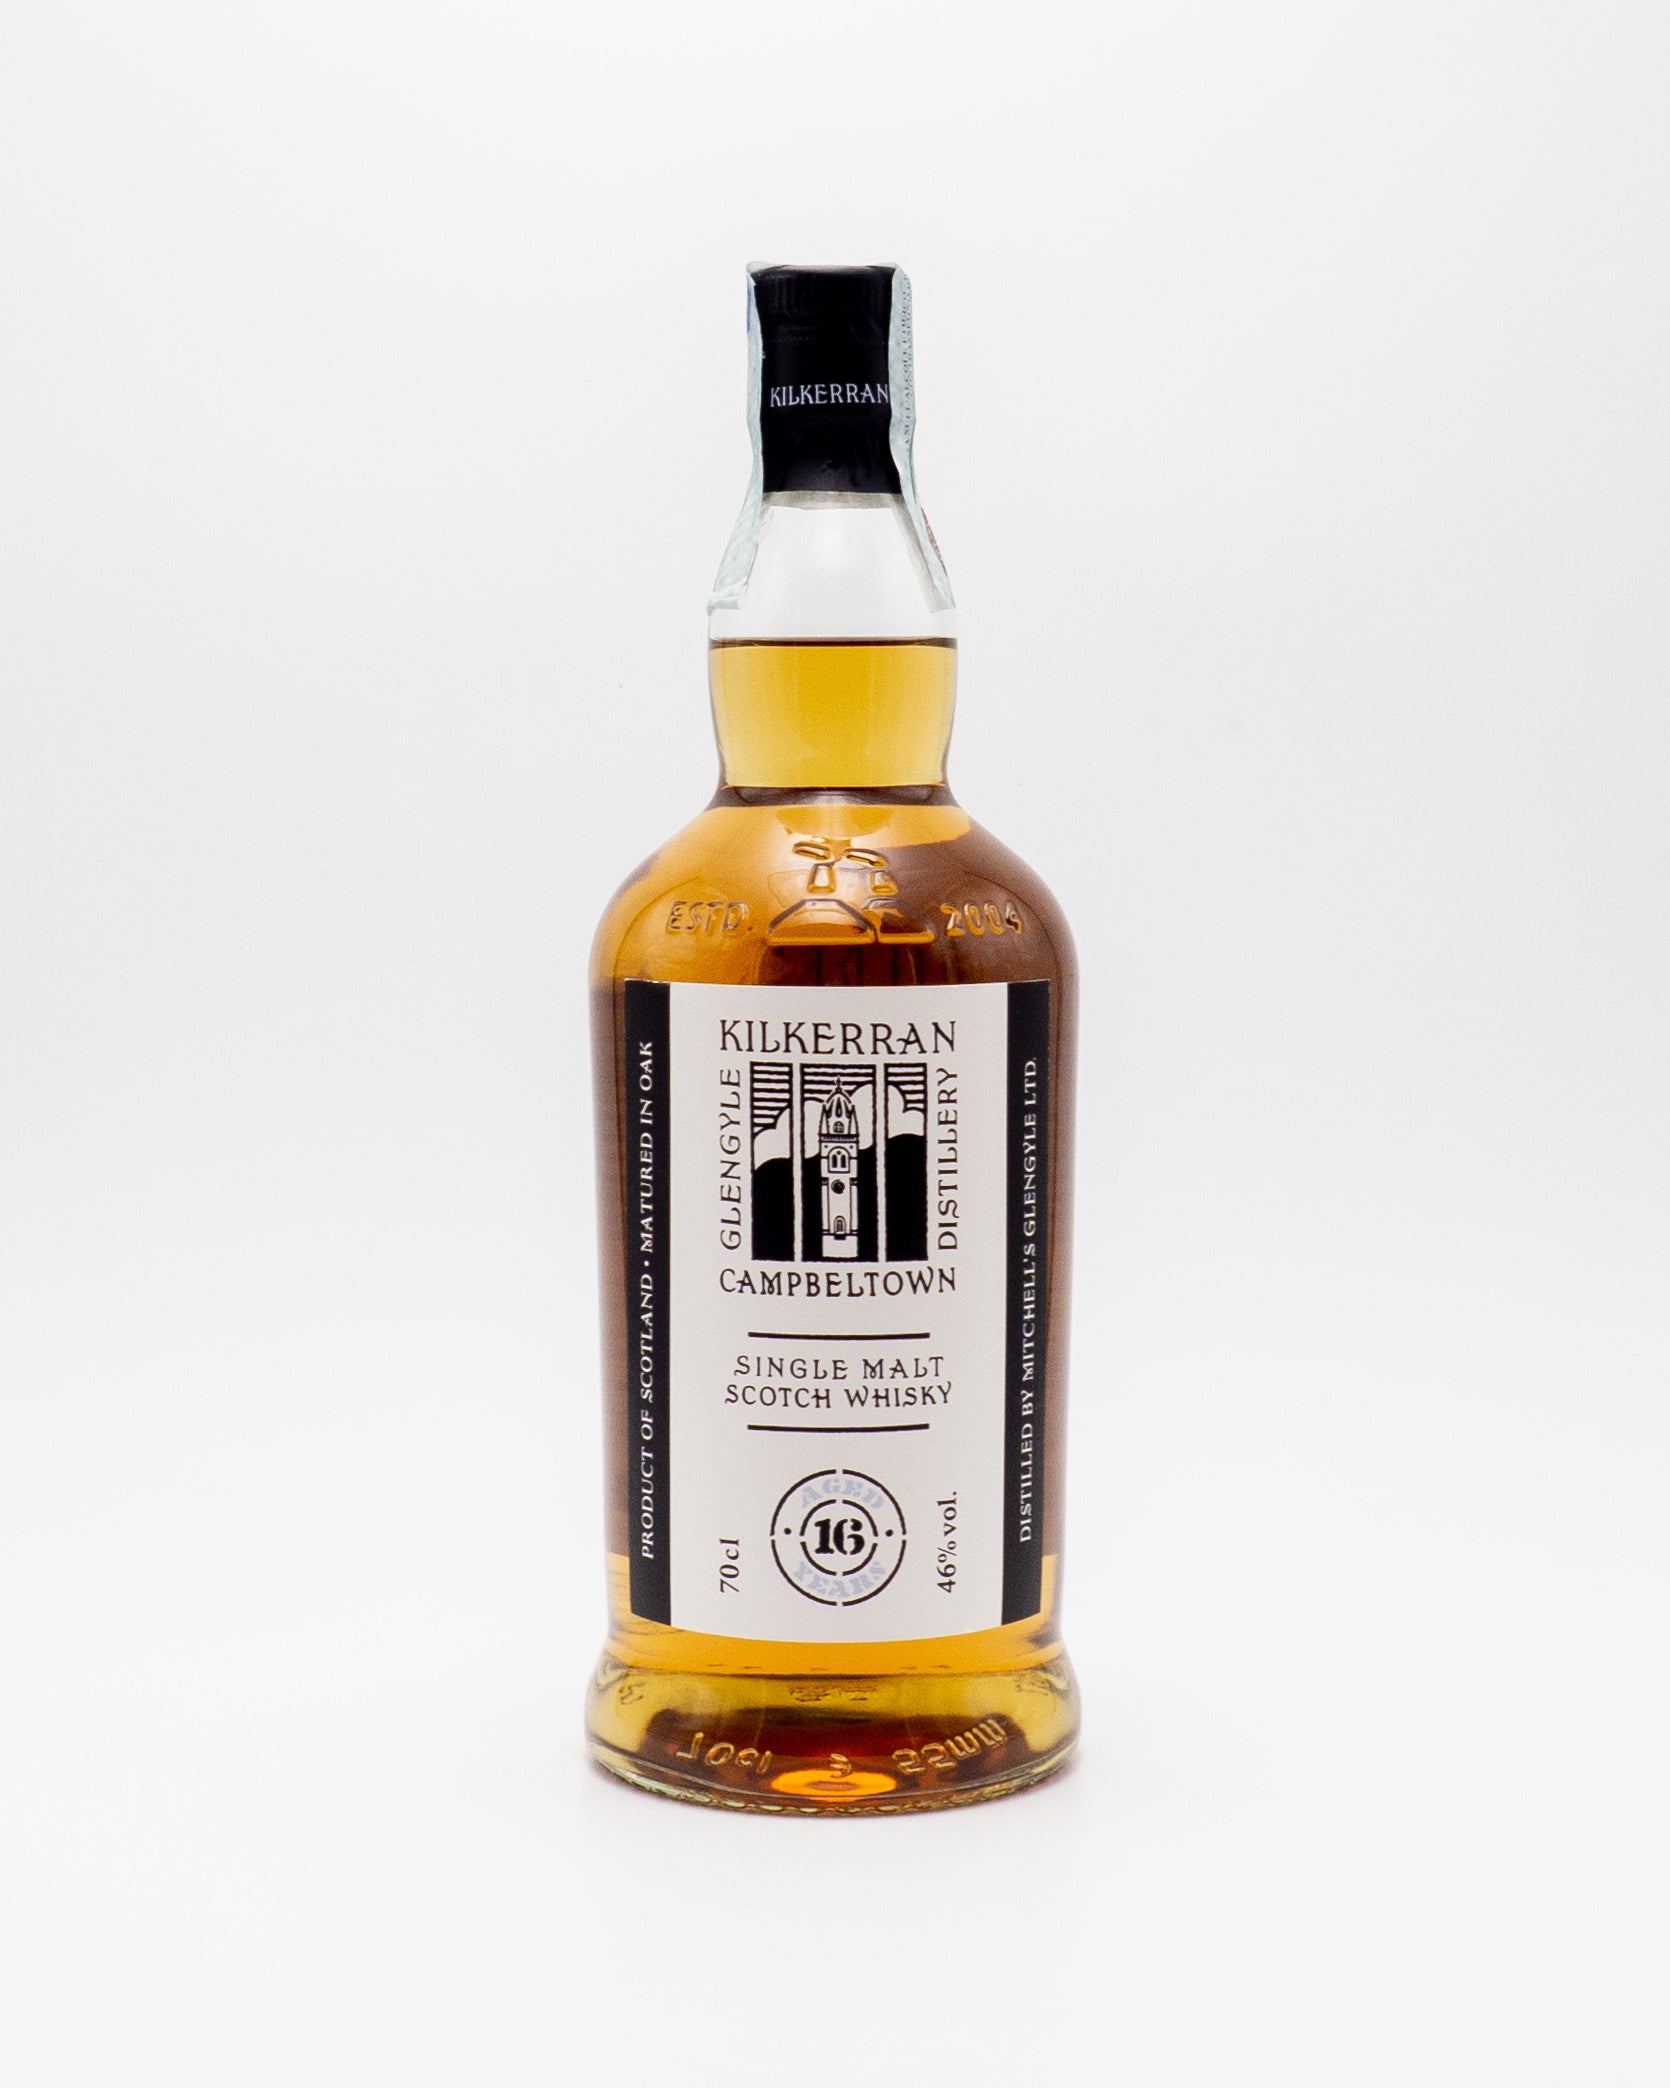 Kilkerran Single Malt Scotch Whisky 16yo - Glengyle